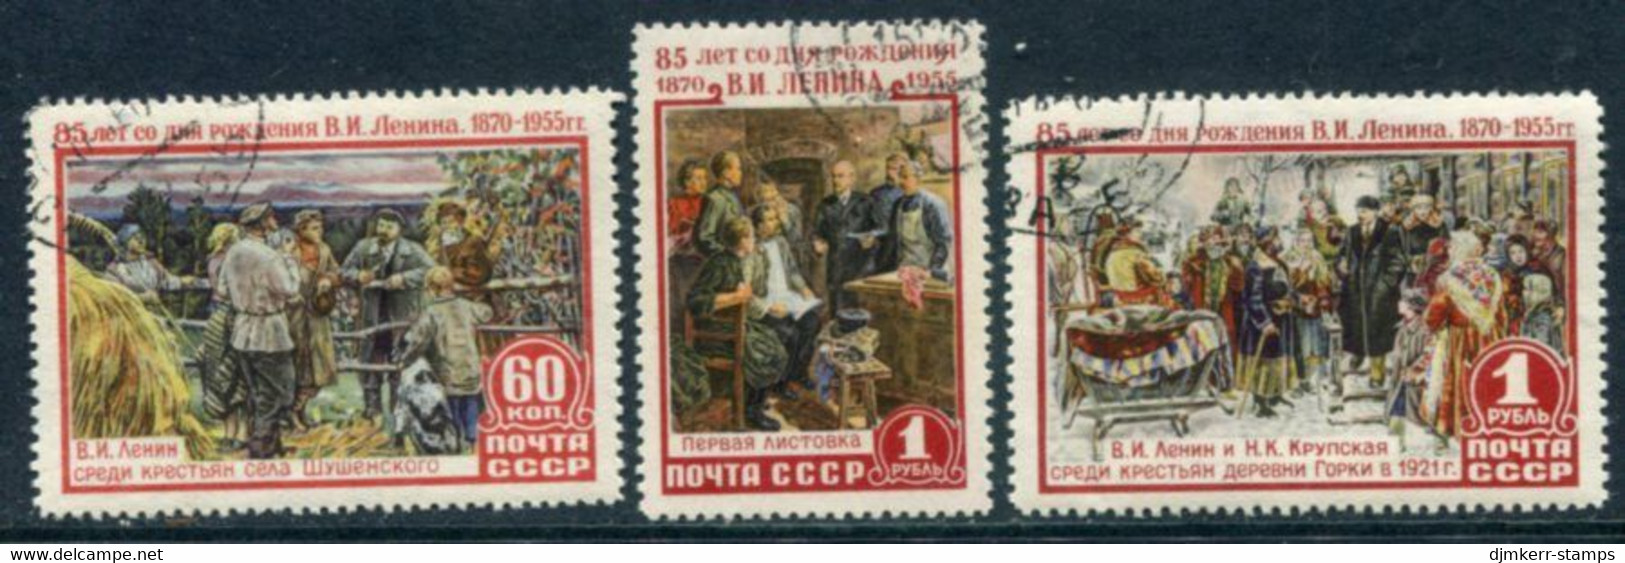 SOVIET UNION 1955 Lenin Birth Anniversary Used.  Michel 1756-58 - Gebruikt